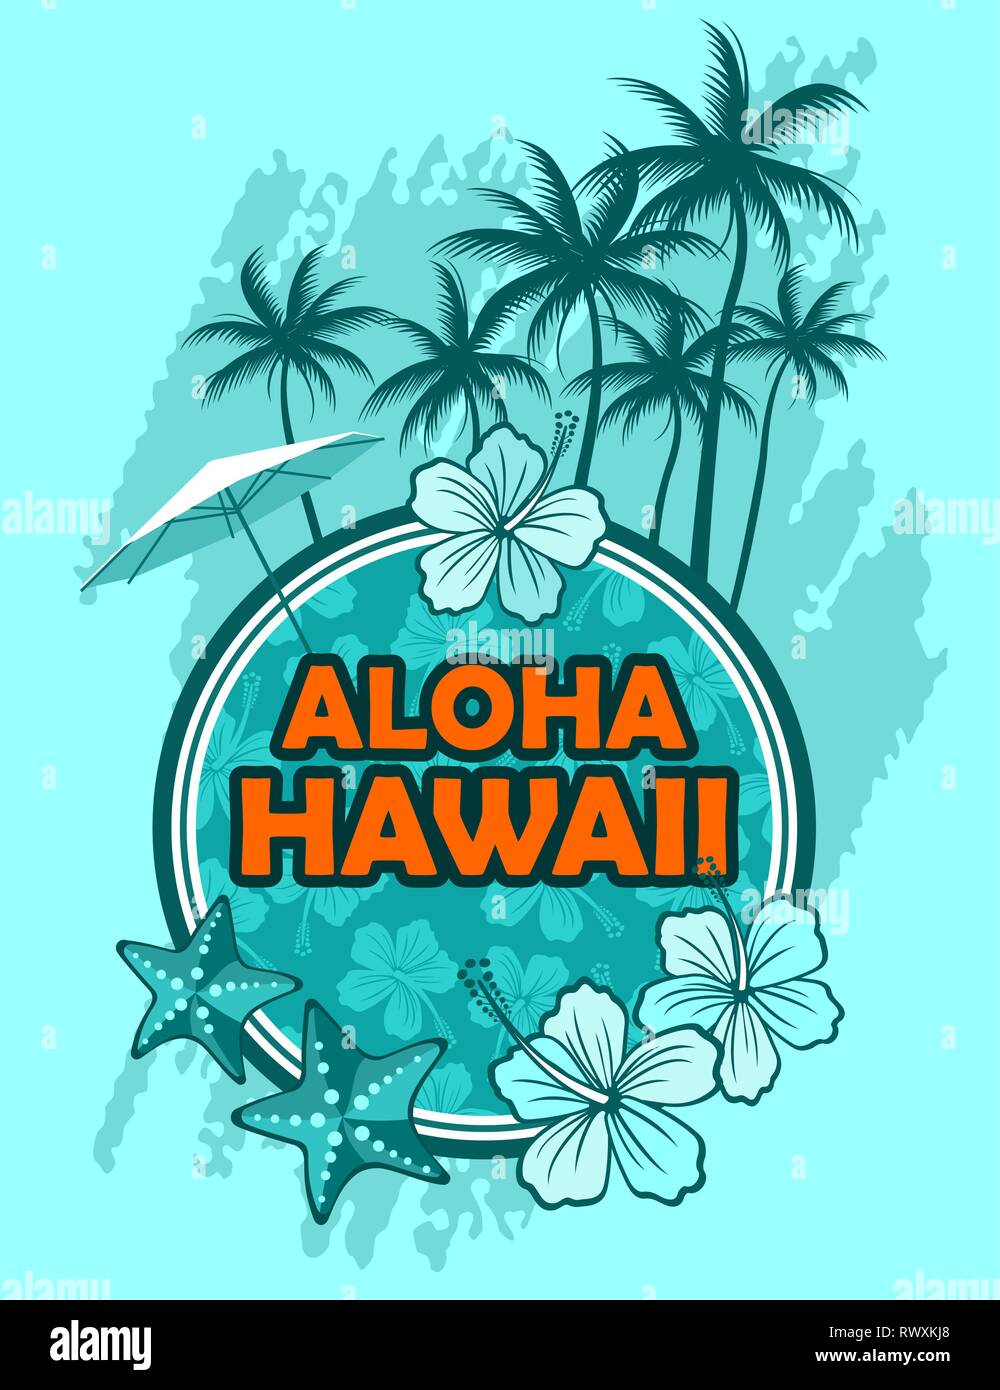 Aloha hawaii -Fotos und -Bildmaterial in hoher Auflösung – Alamy